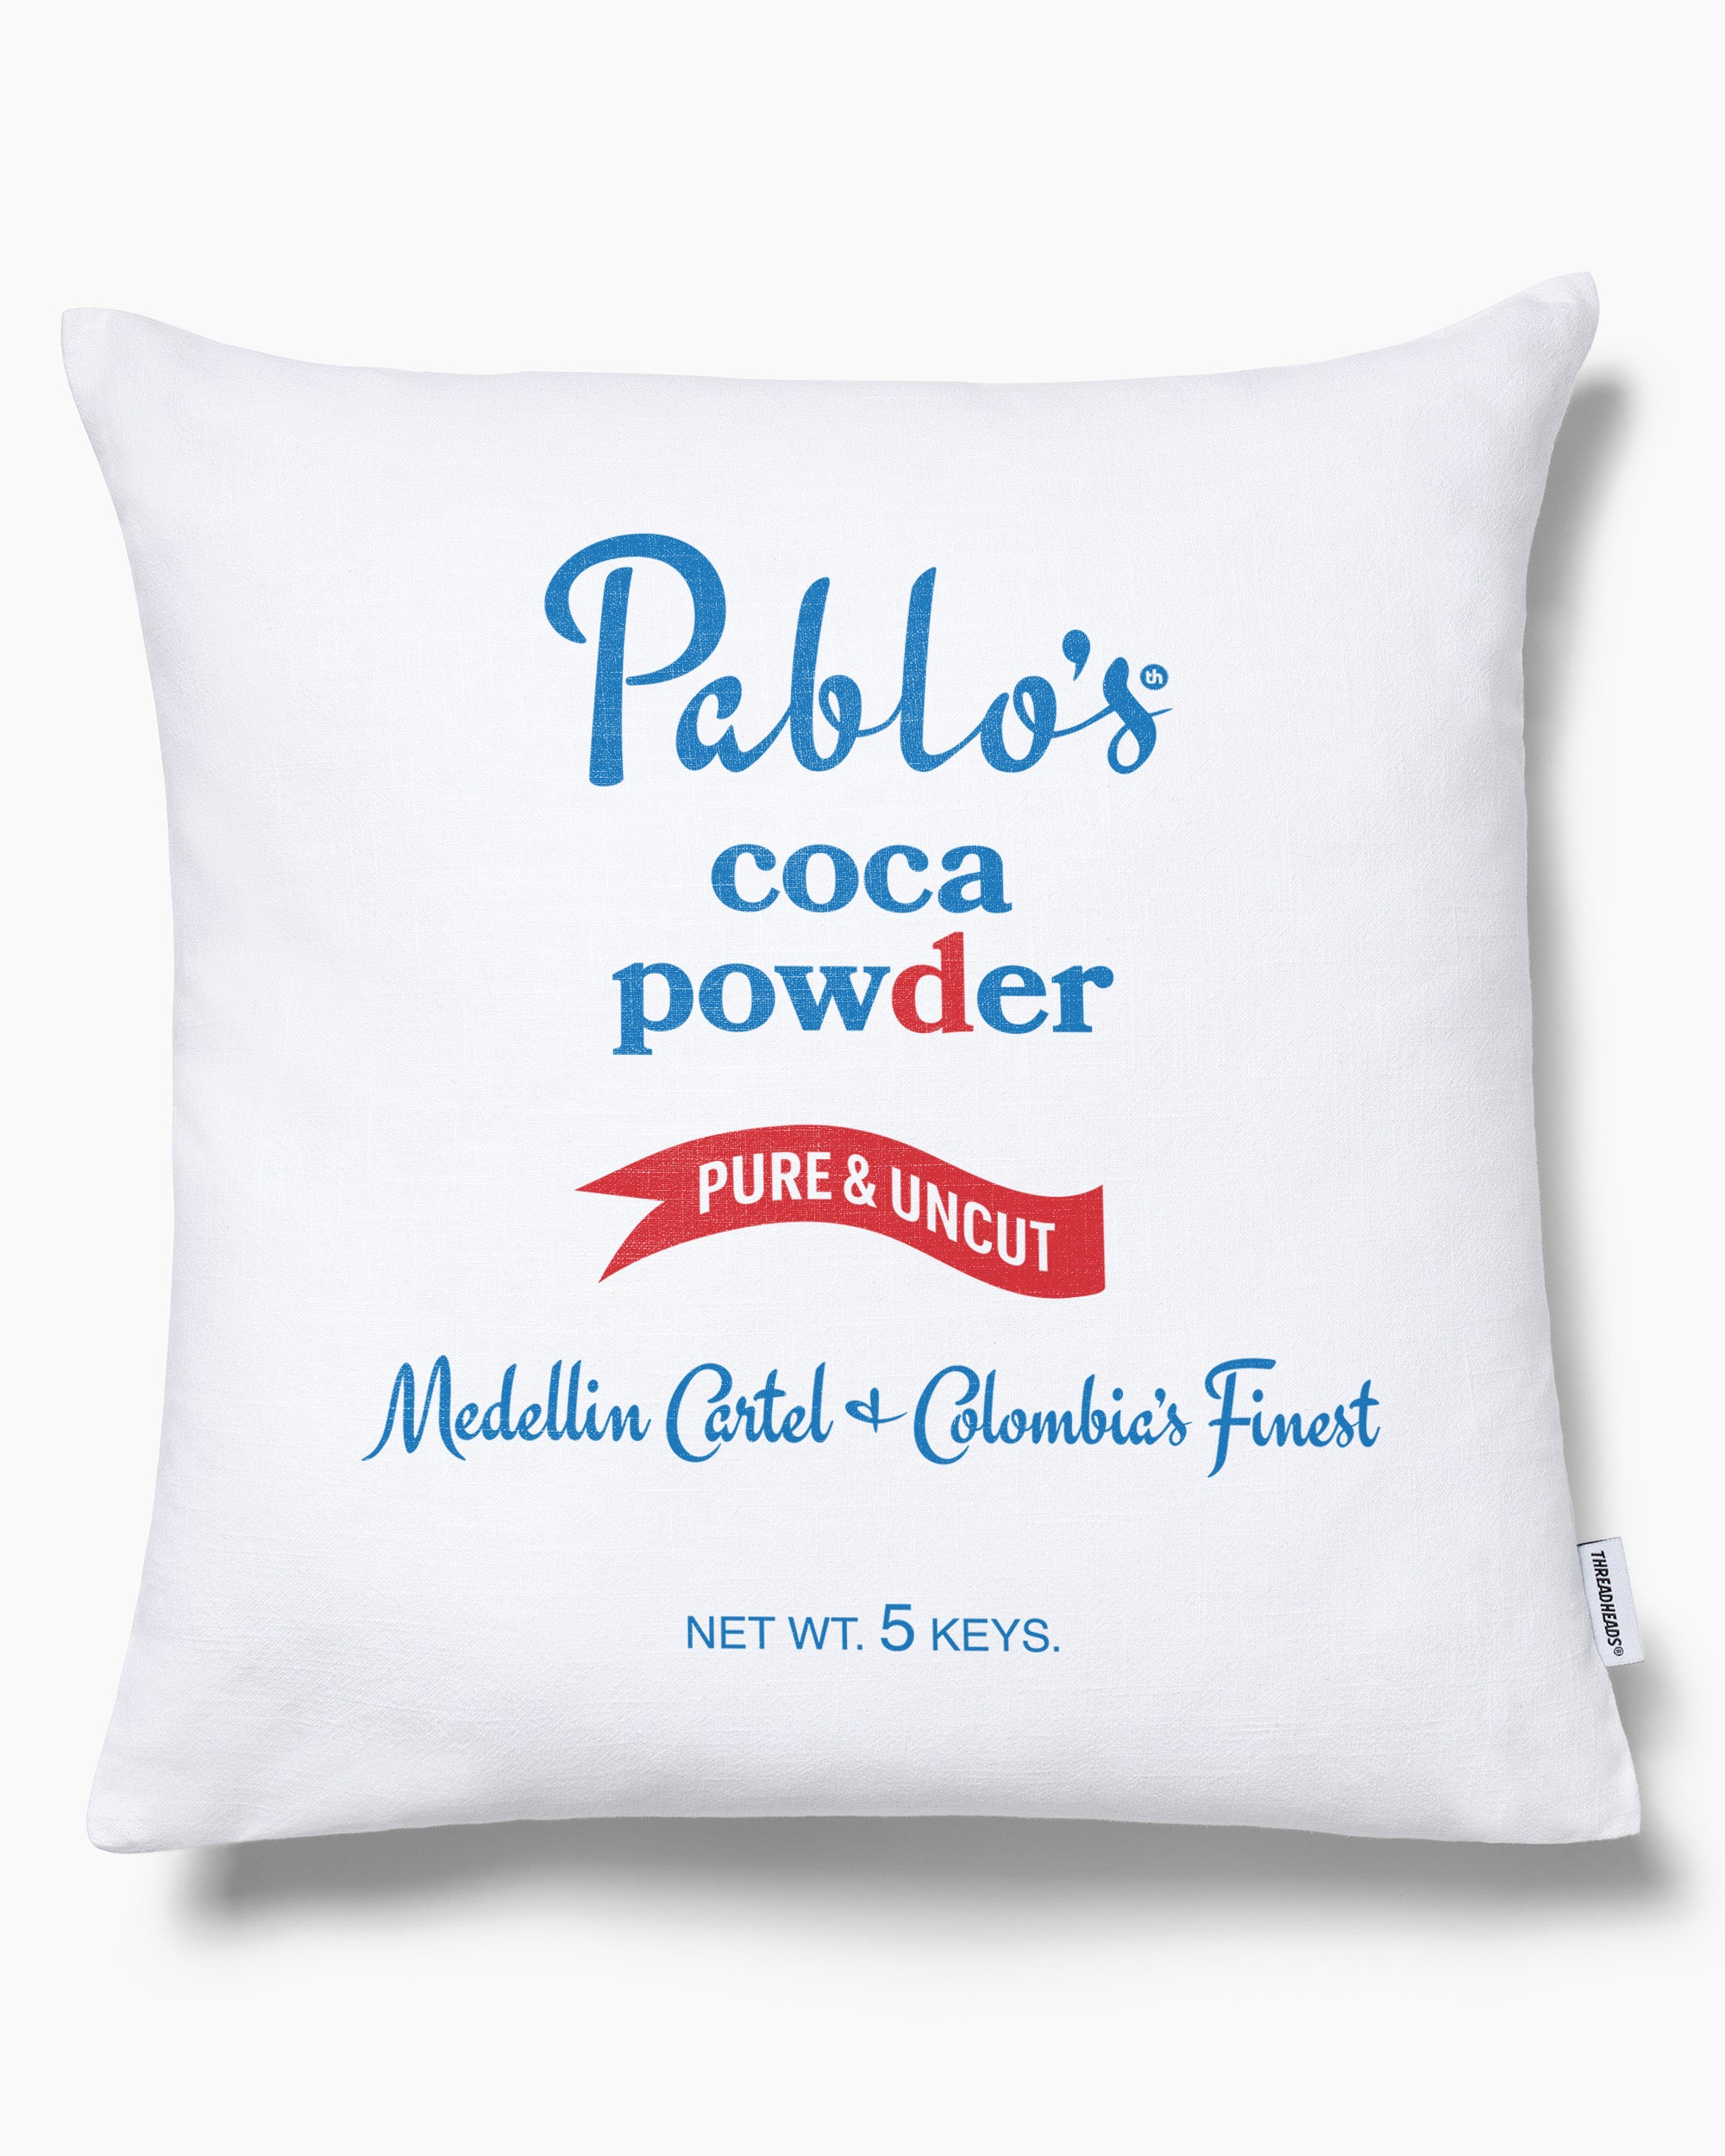 Pablo's Coca Powder Cushion Australia Online